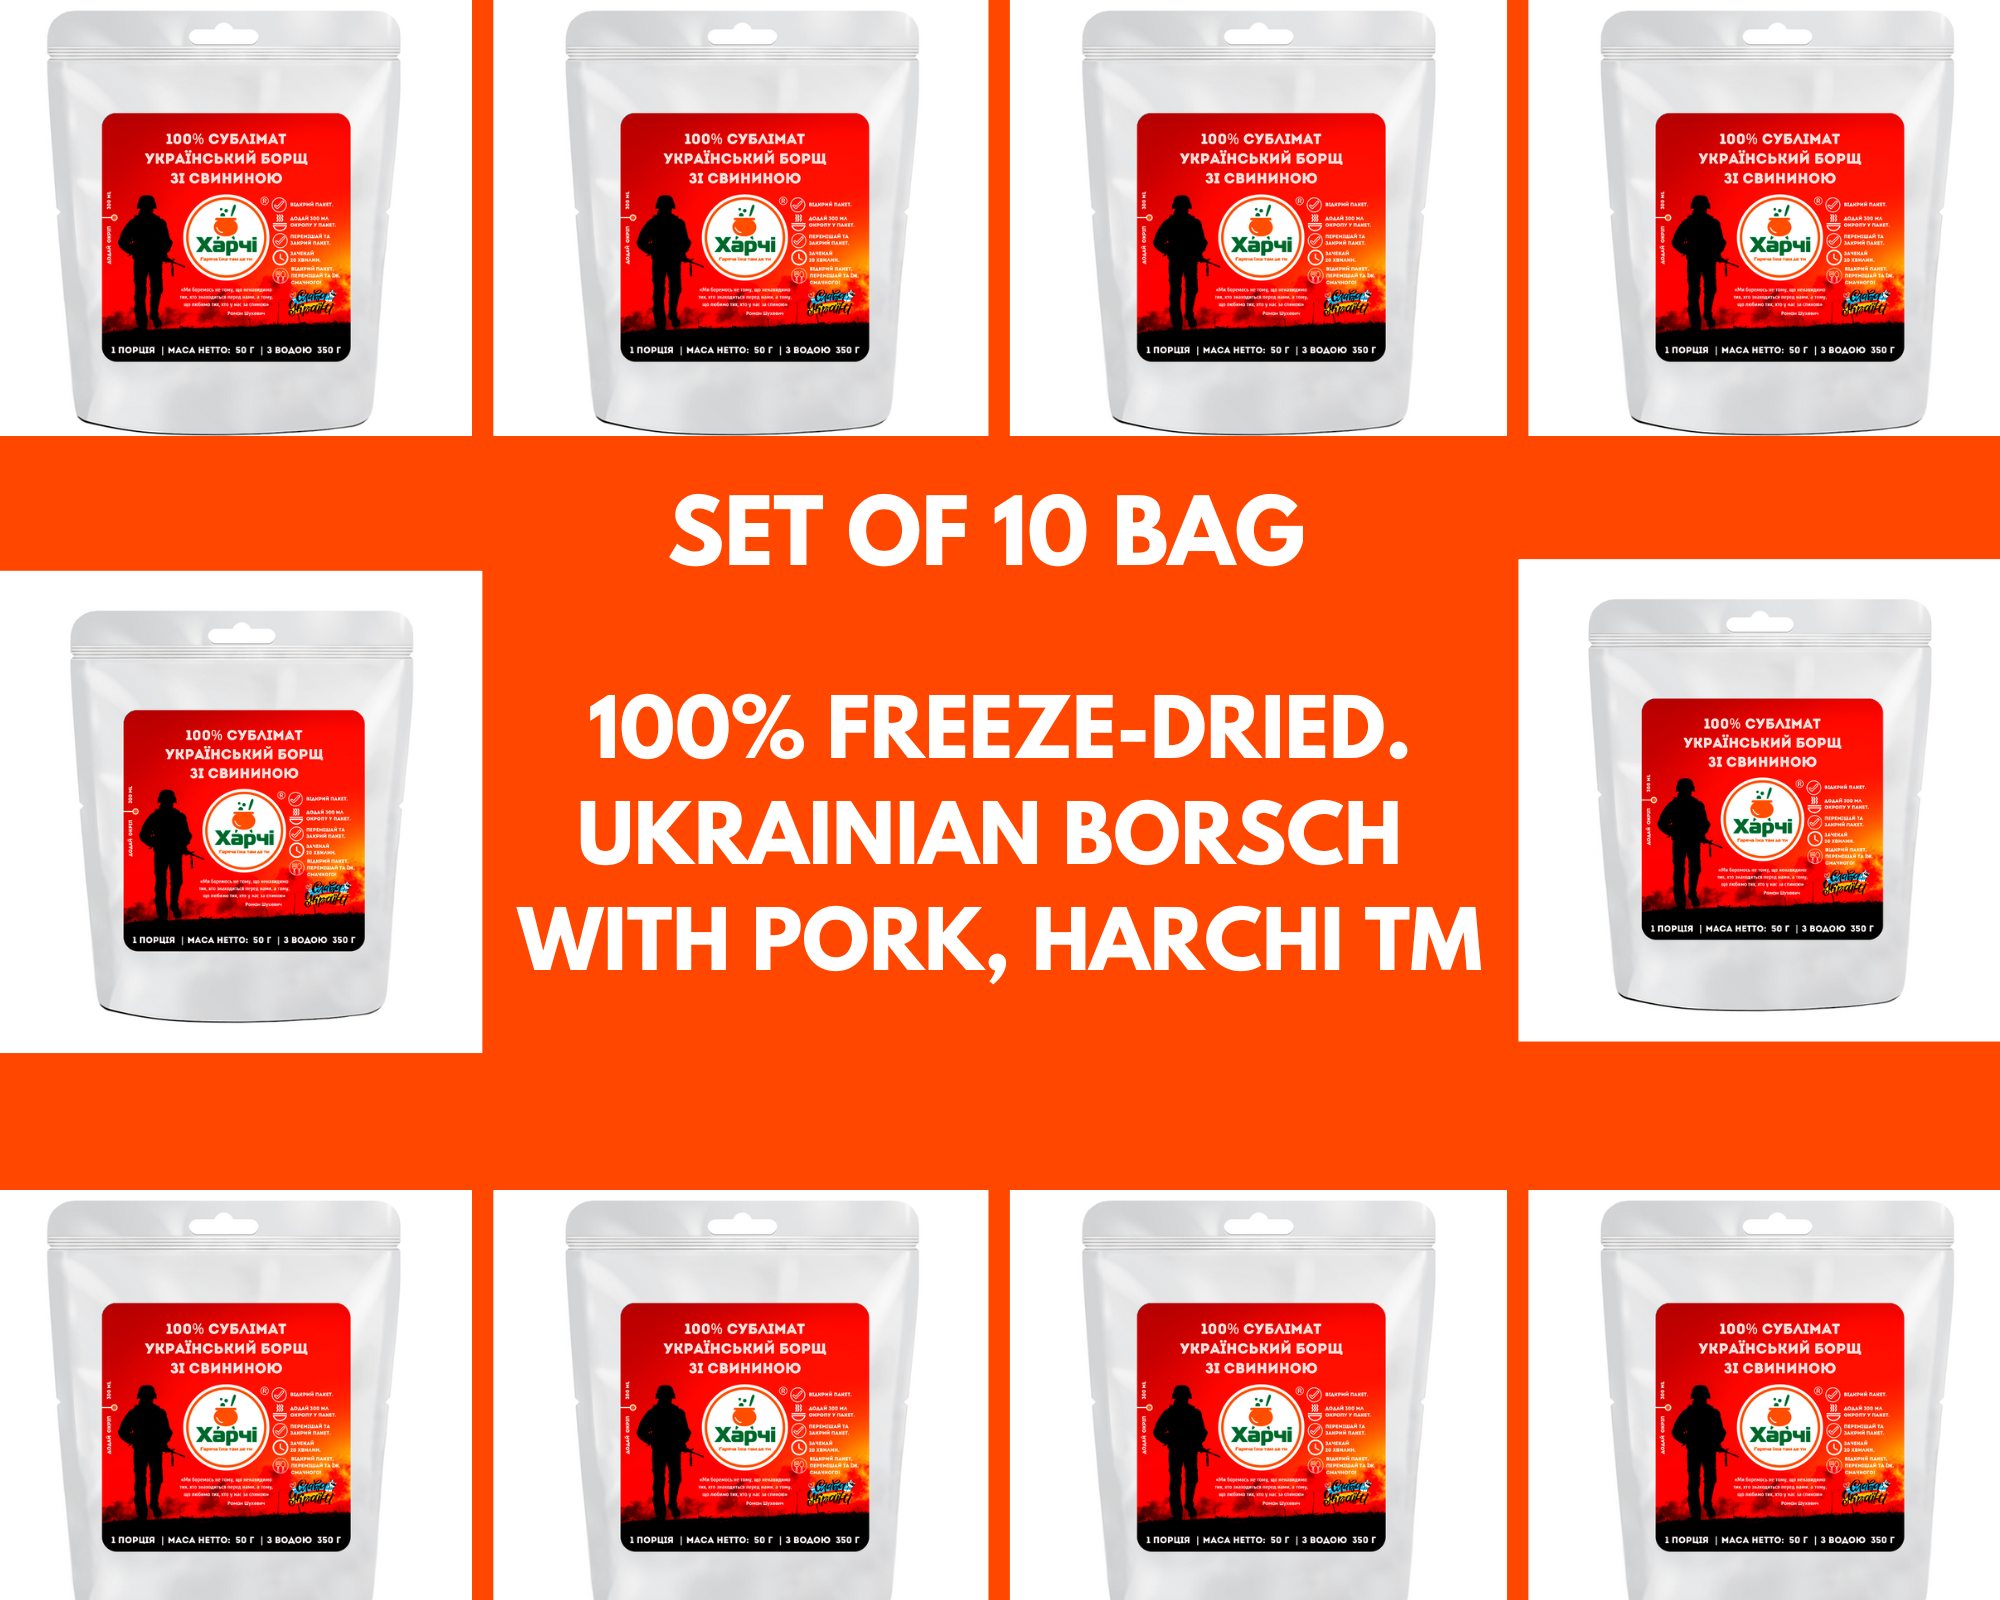 100% Freeze-dried. Ukrainian borsch with pork, Harchi TM. Set of 10 bag.